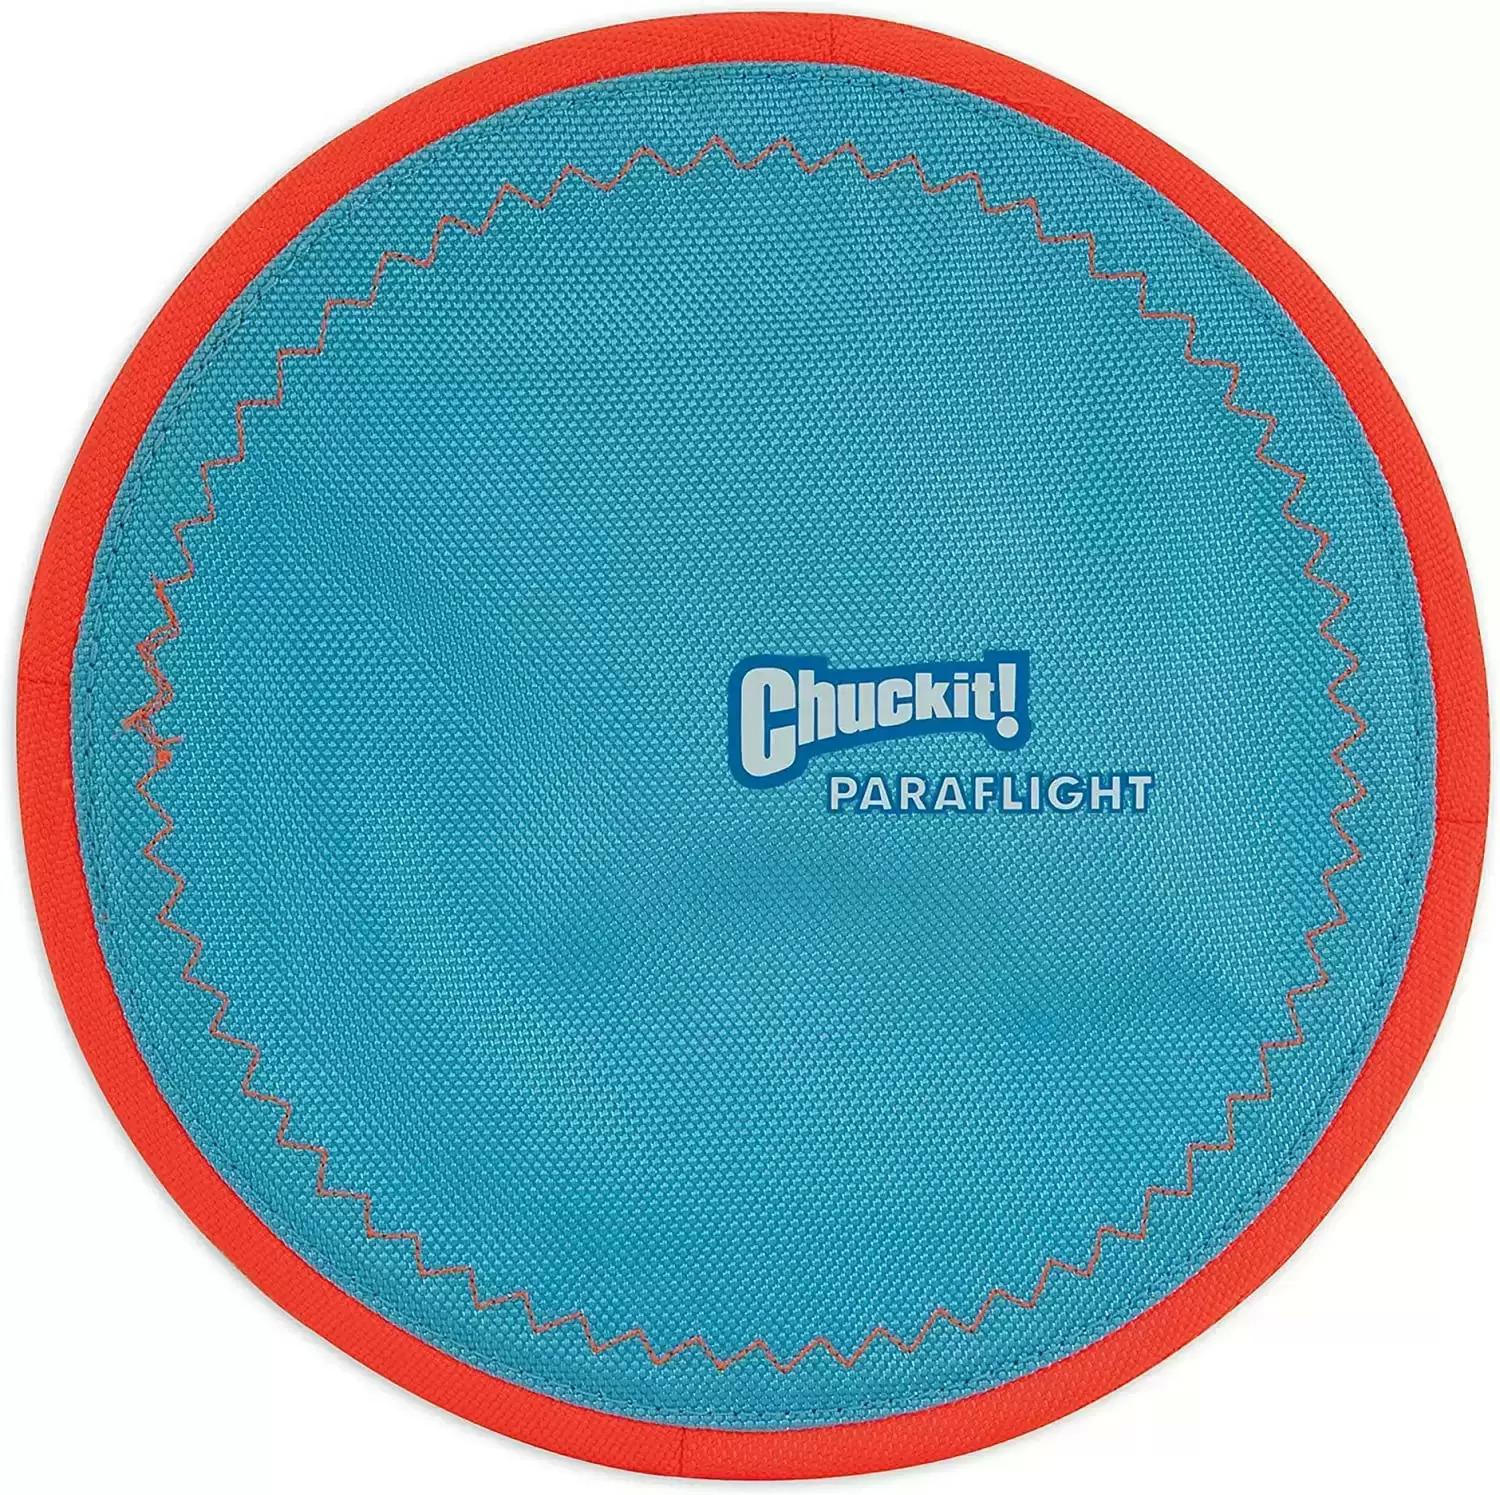 ChuckIt Paraflight Flyer Dog Frisbee Toy $6 Shipped